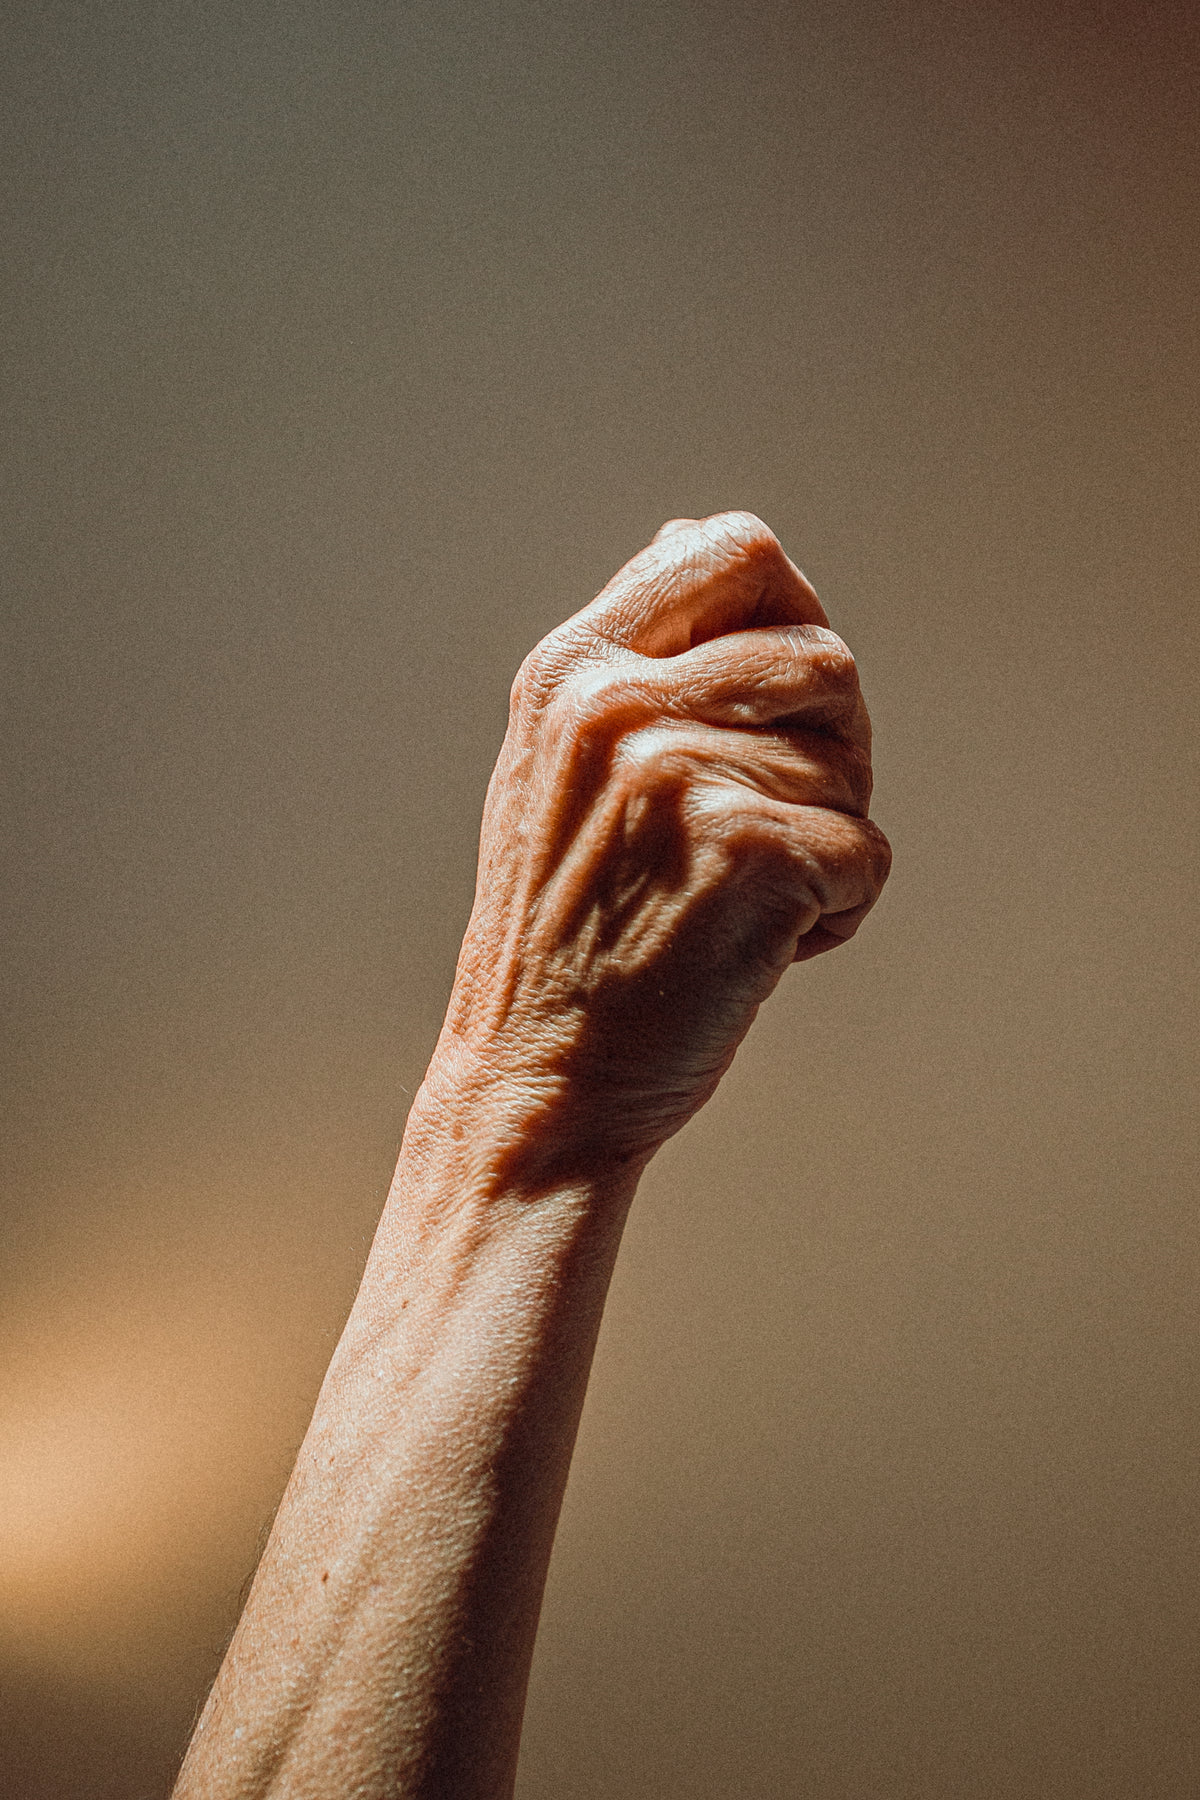 elderly person raises their fist